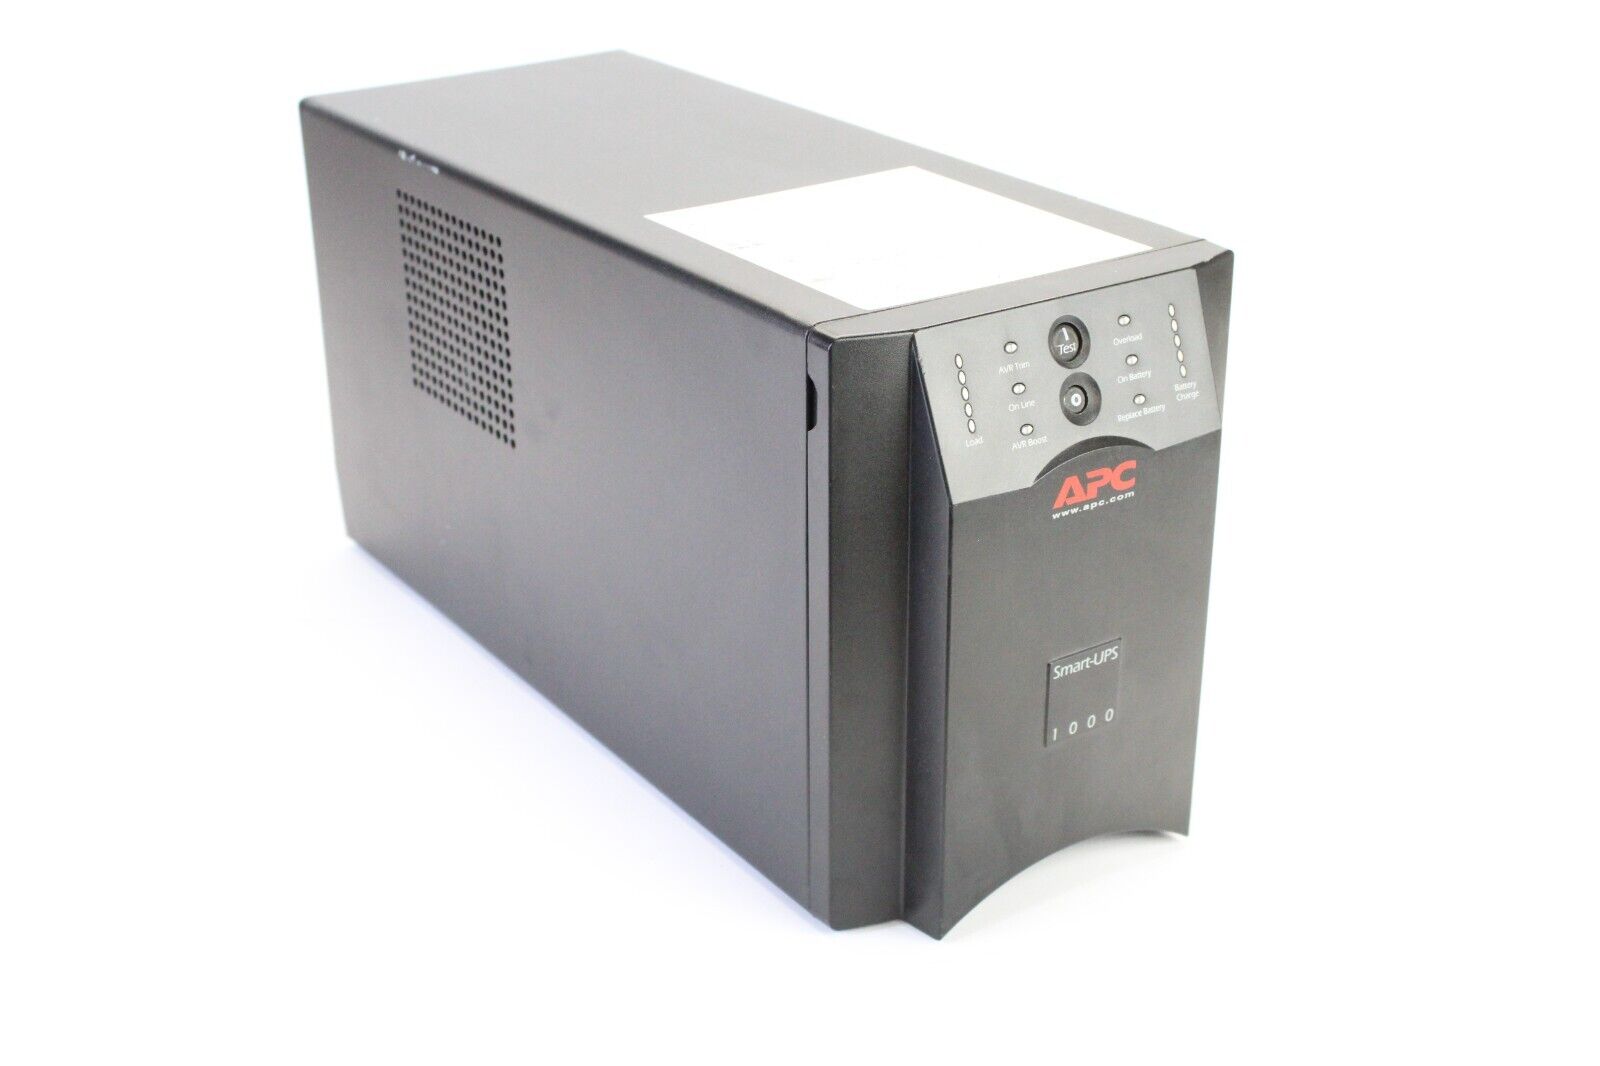 SUA1000 APC Smart-UPS 1000VA 670W 120V Power Backup UPS -  No Battery